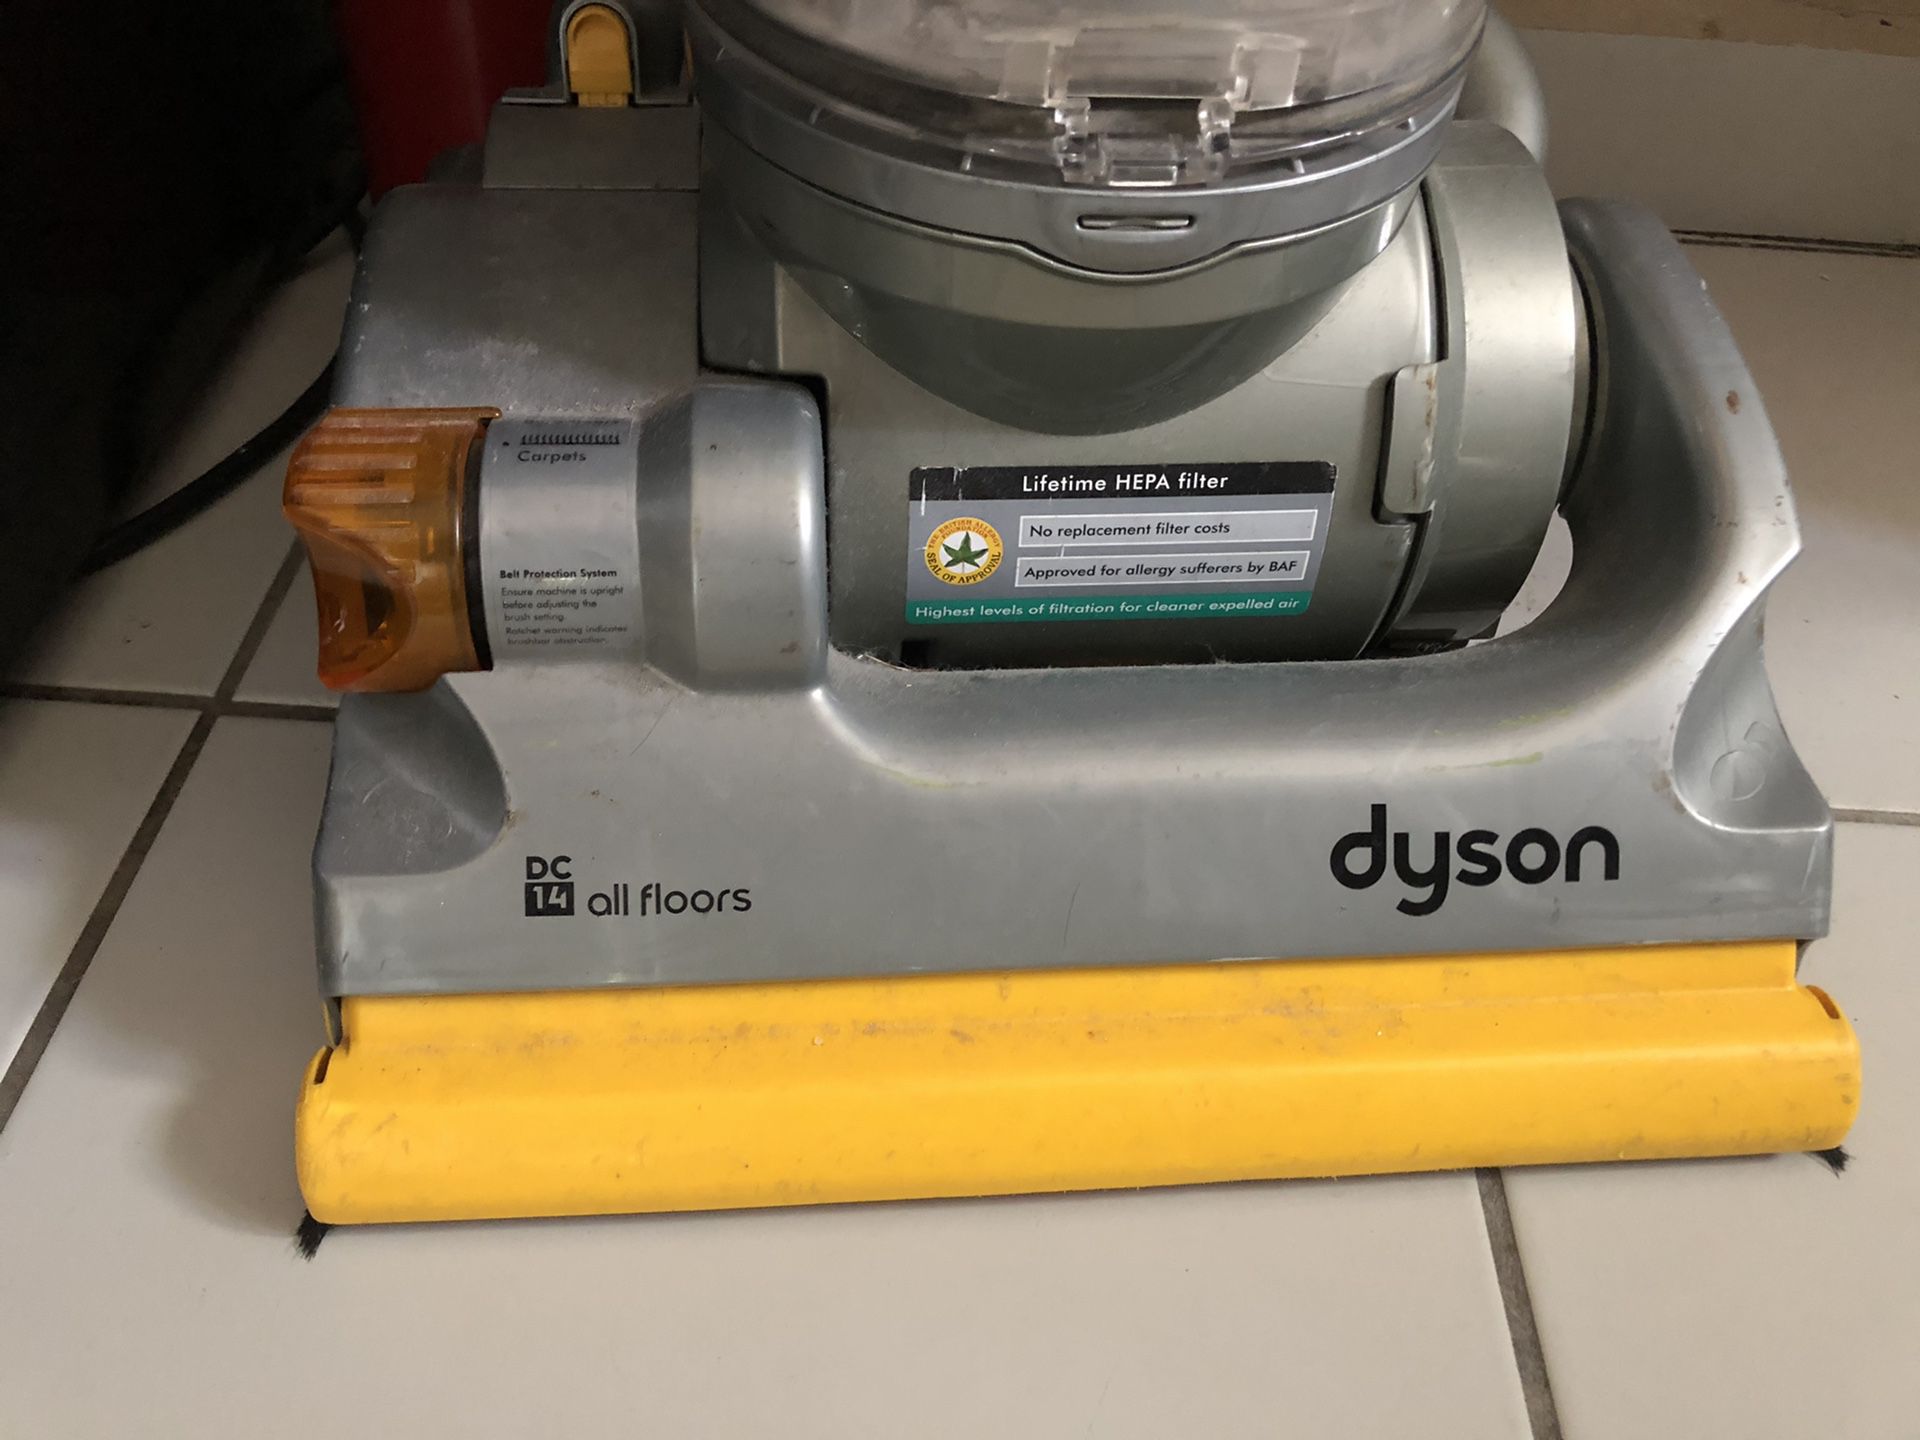 Vacuum Dyson DC 14 All Floors